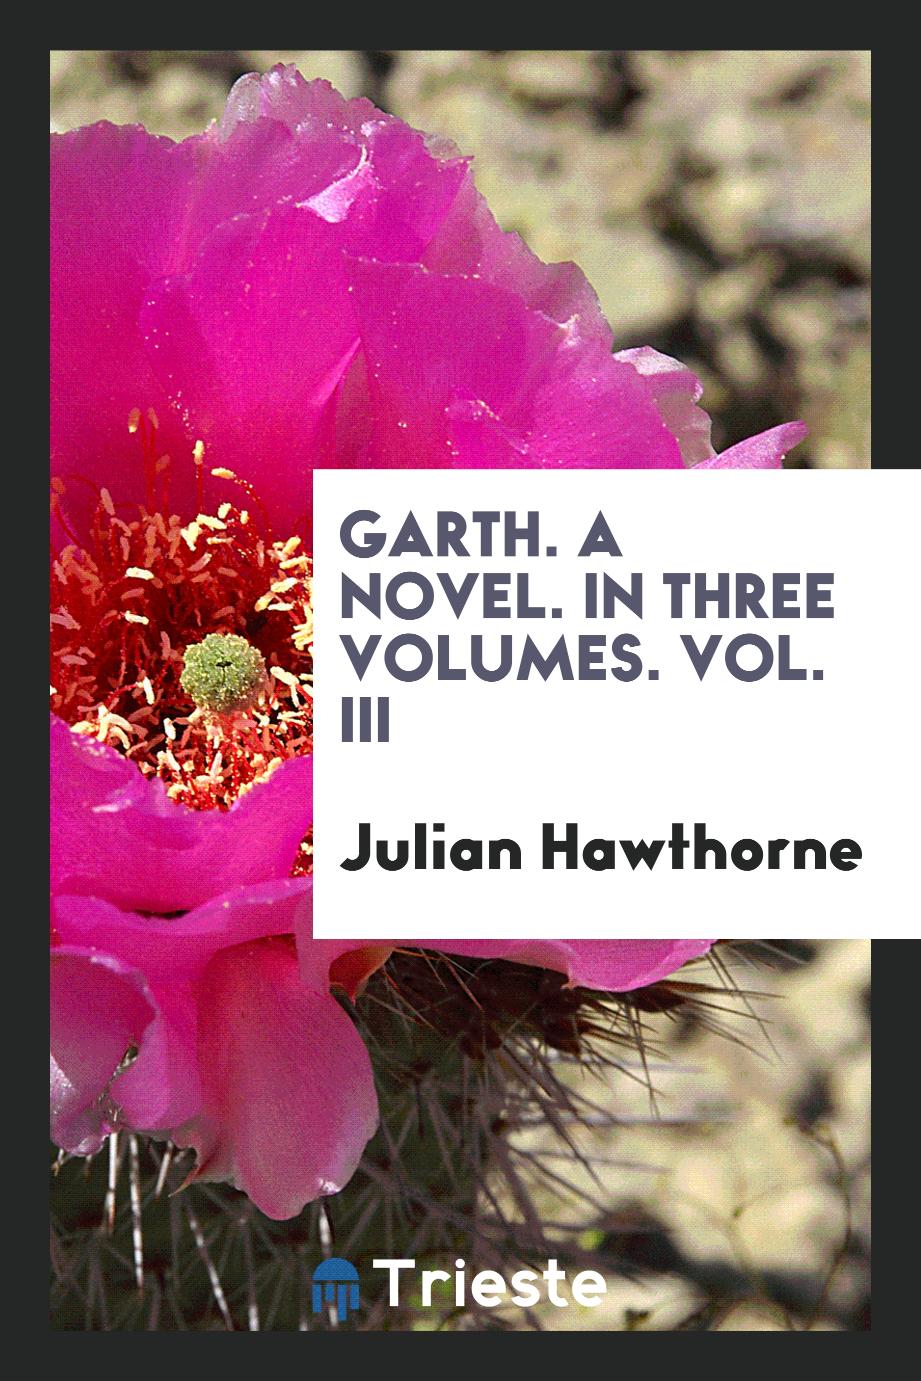 Garth. A Novel. In Three Volumes. Vol. III